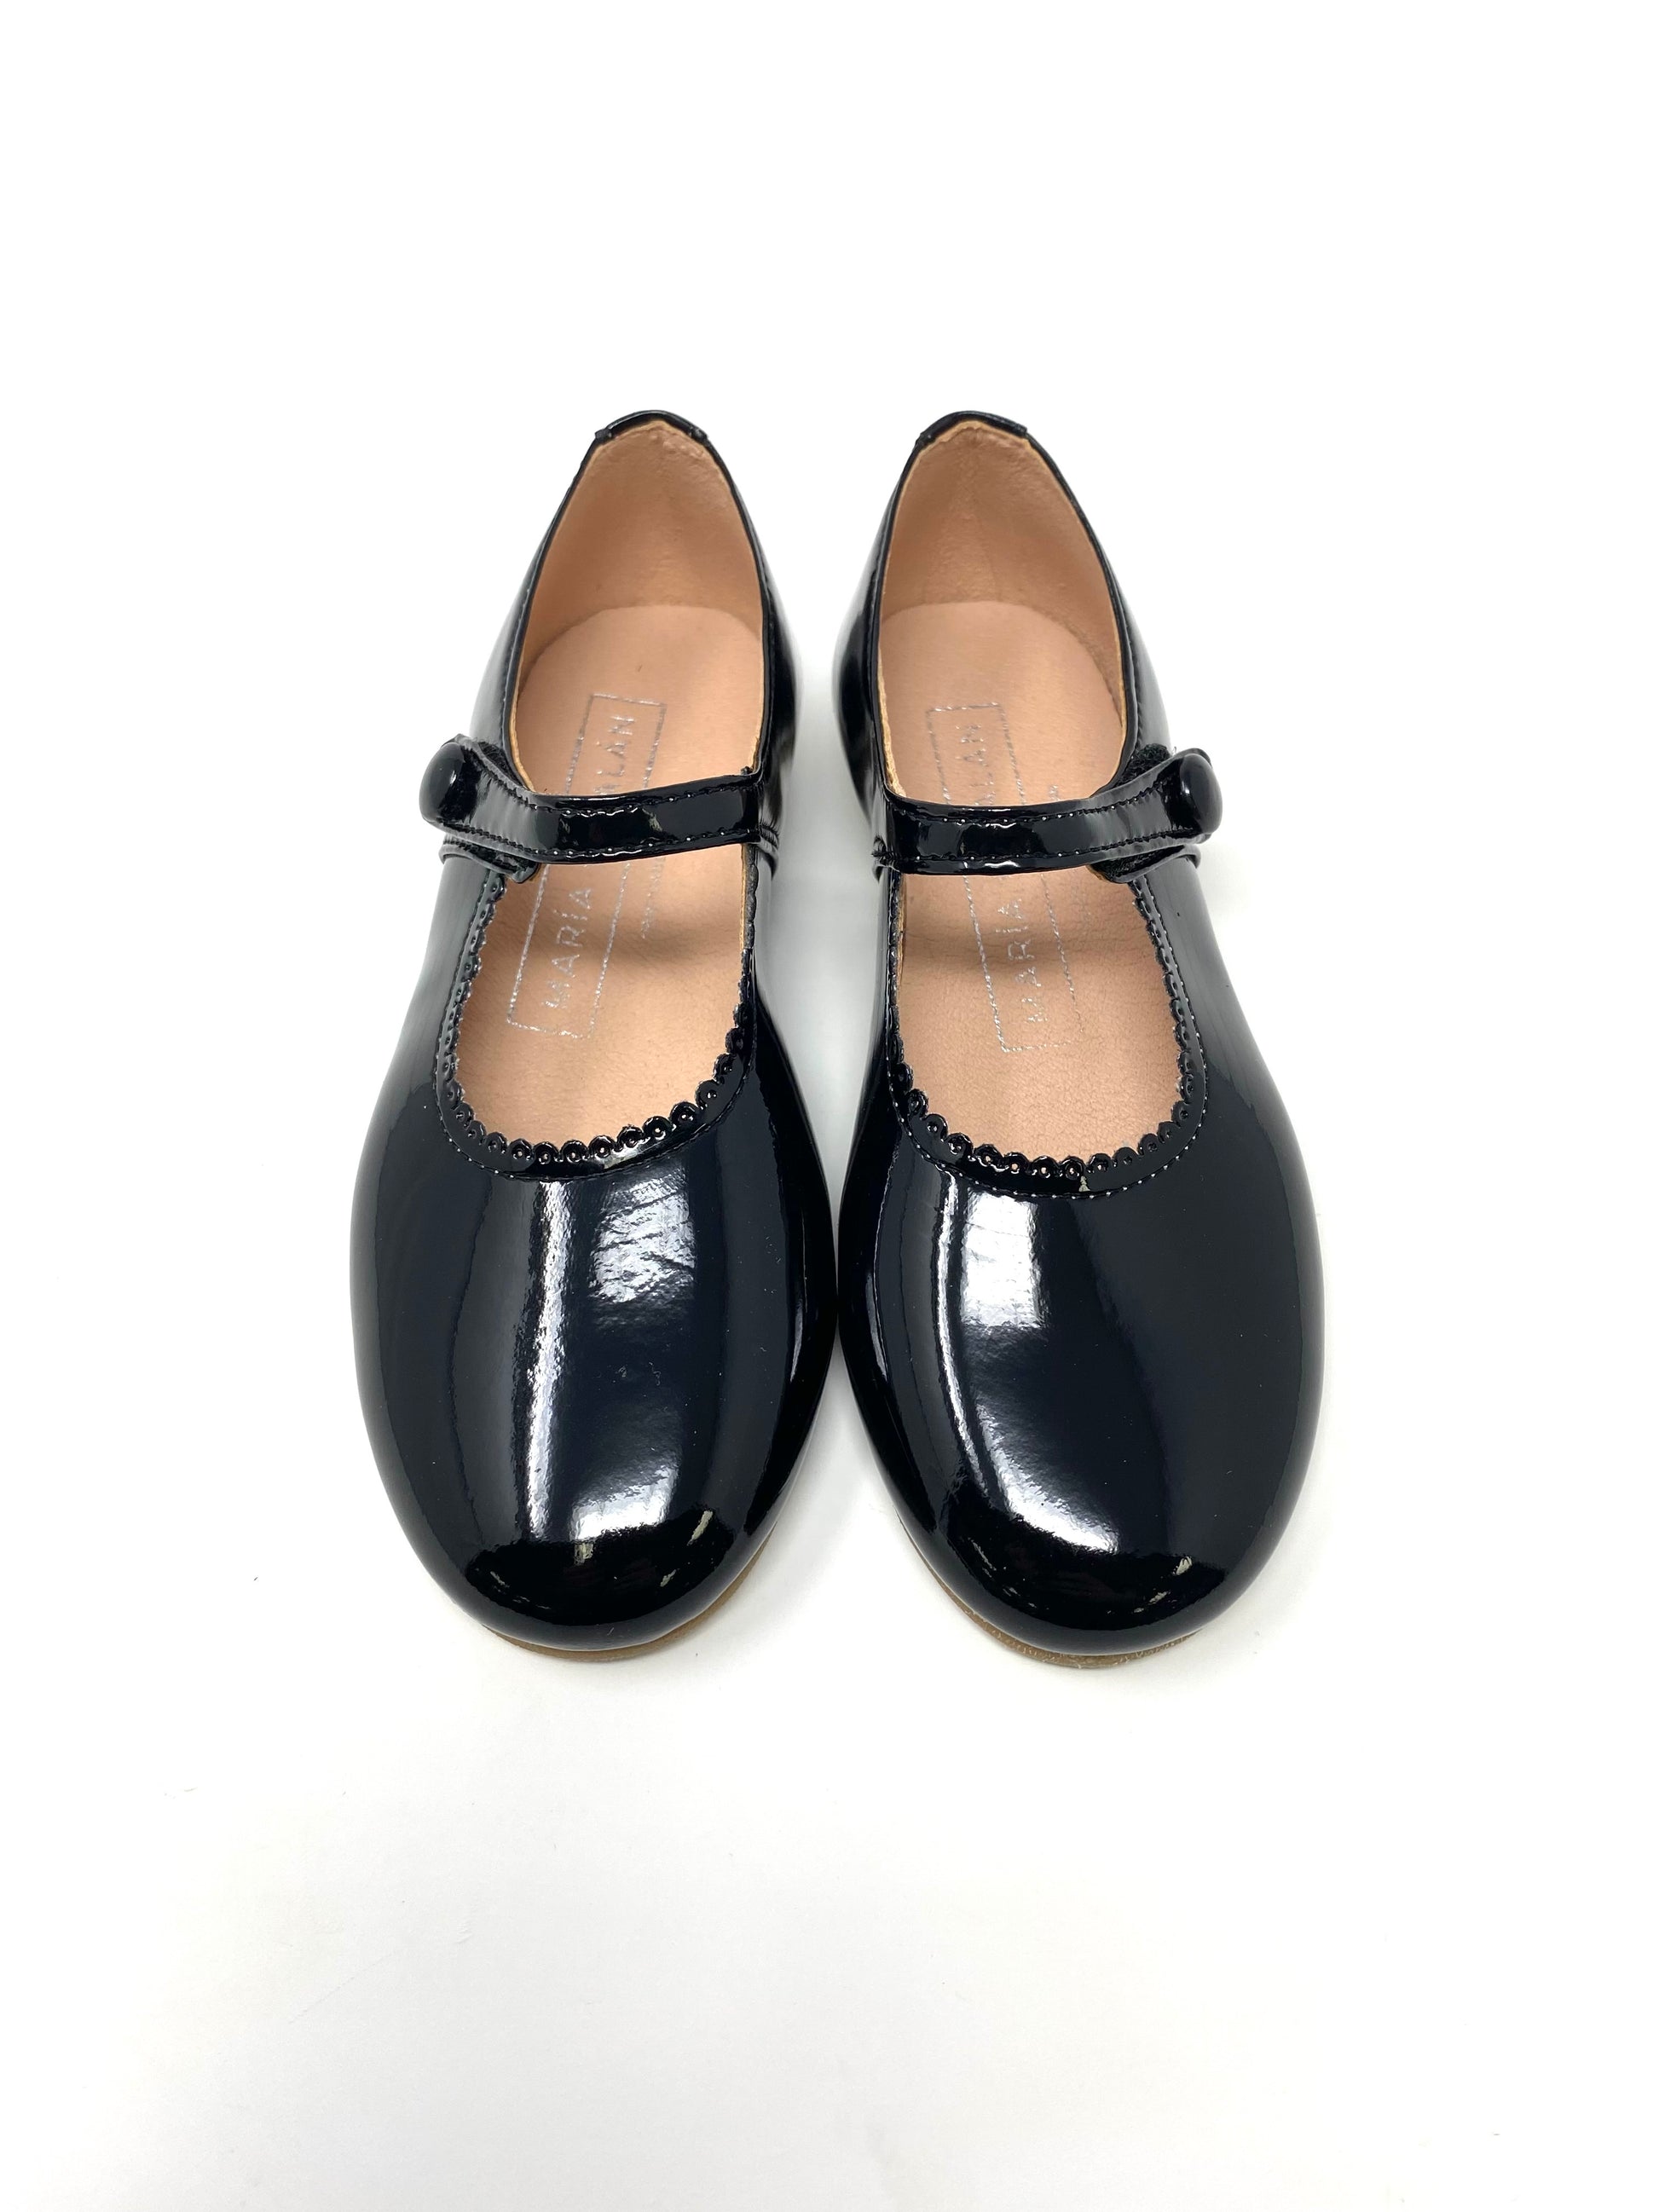 Elegant Button Mary Jane - Patent Black Girls Shoes Maria Catalan   